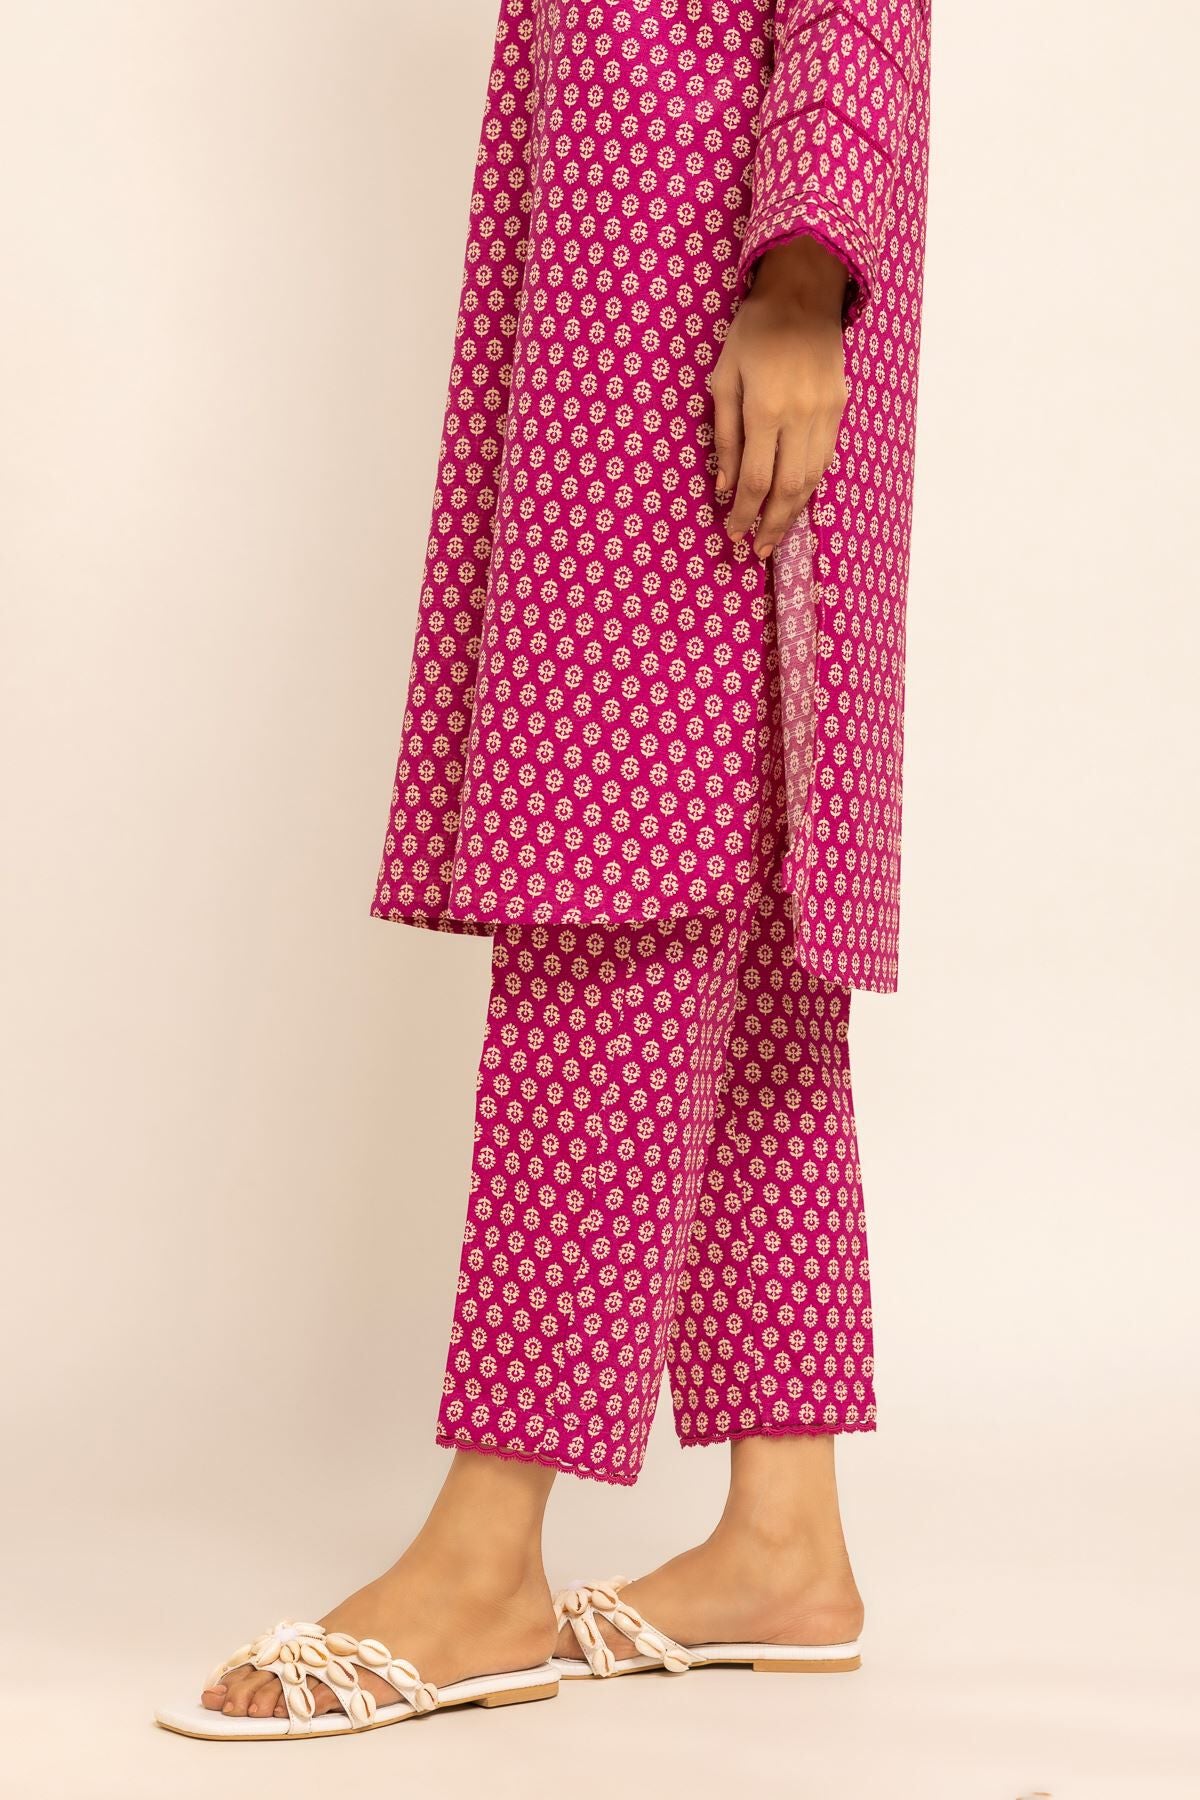 Khaadi Pink Classic Khaddar 2-Piece Suit